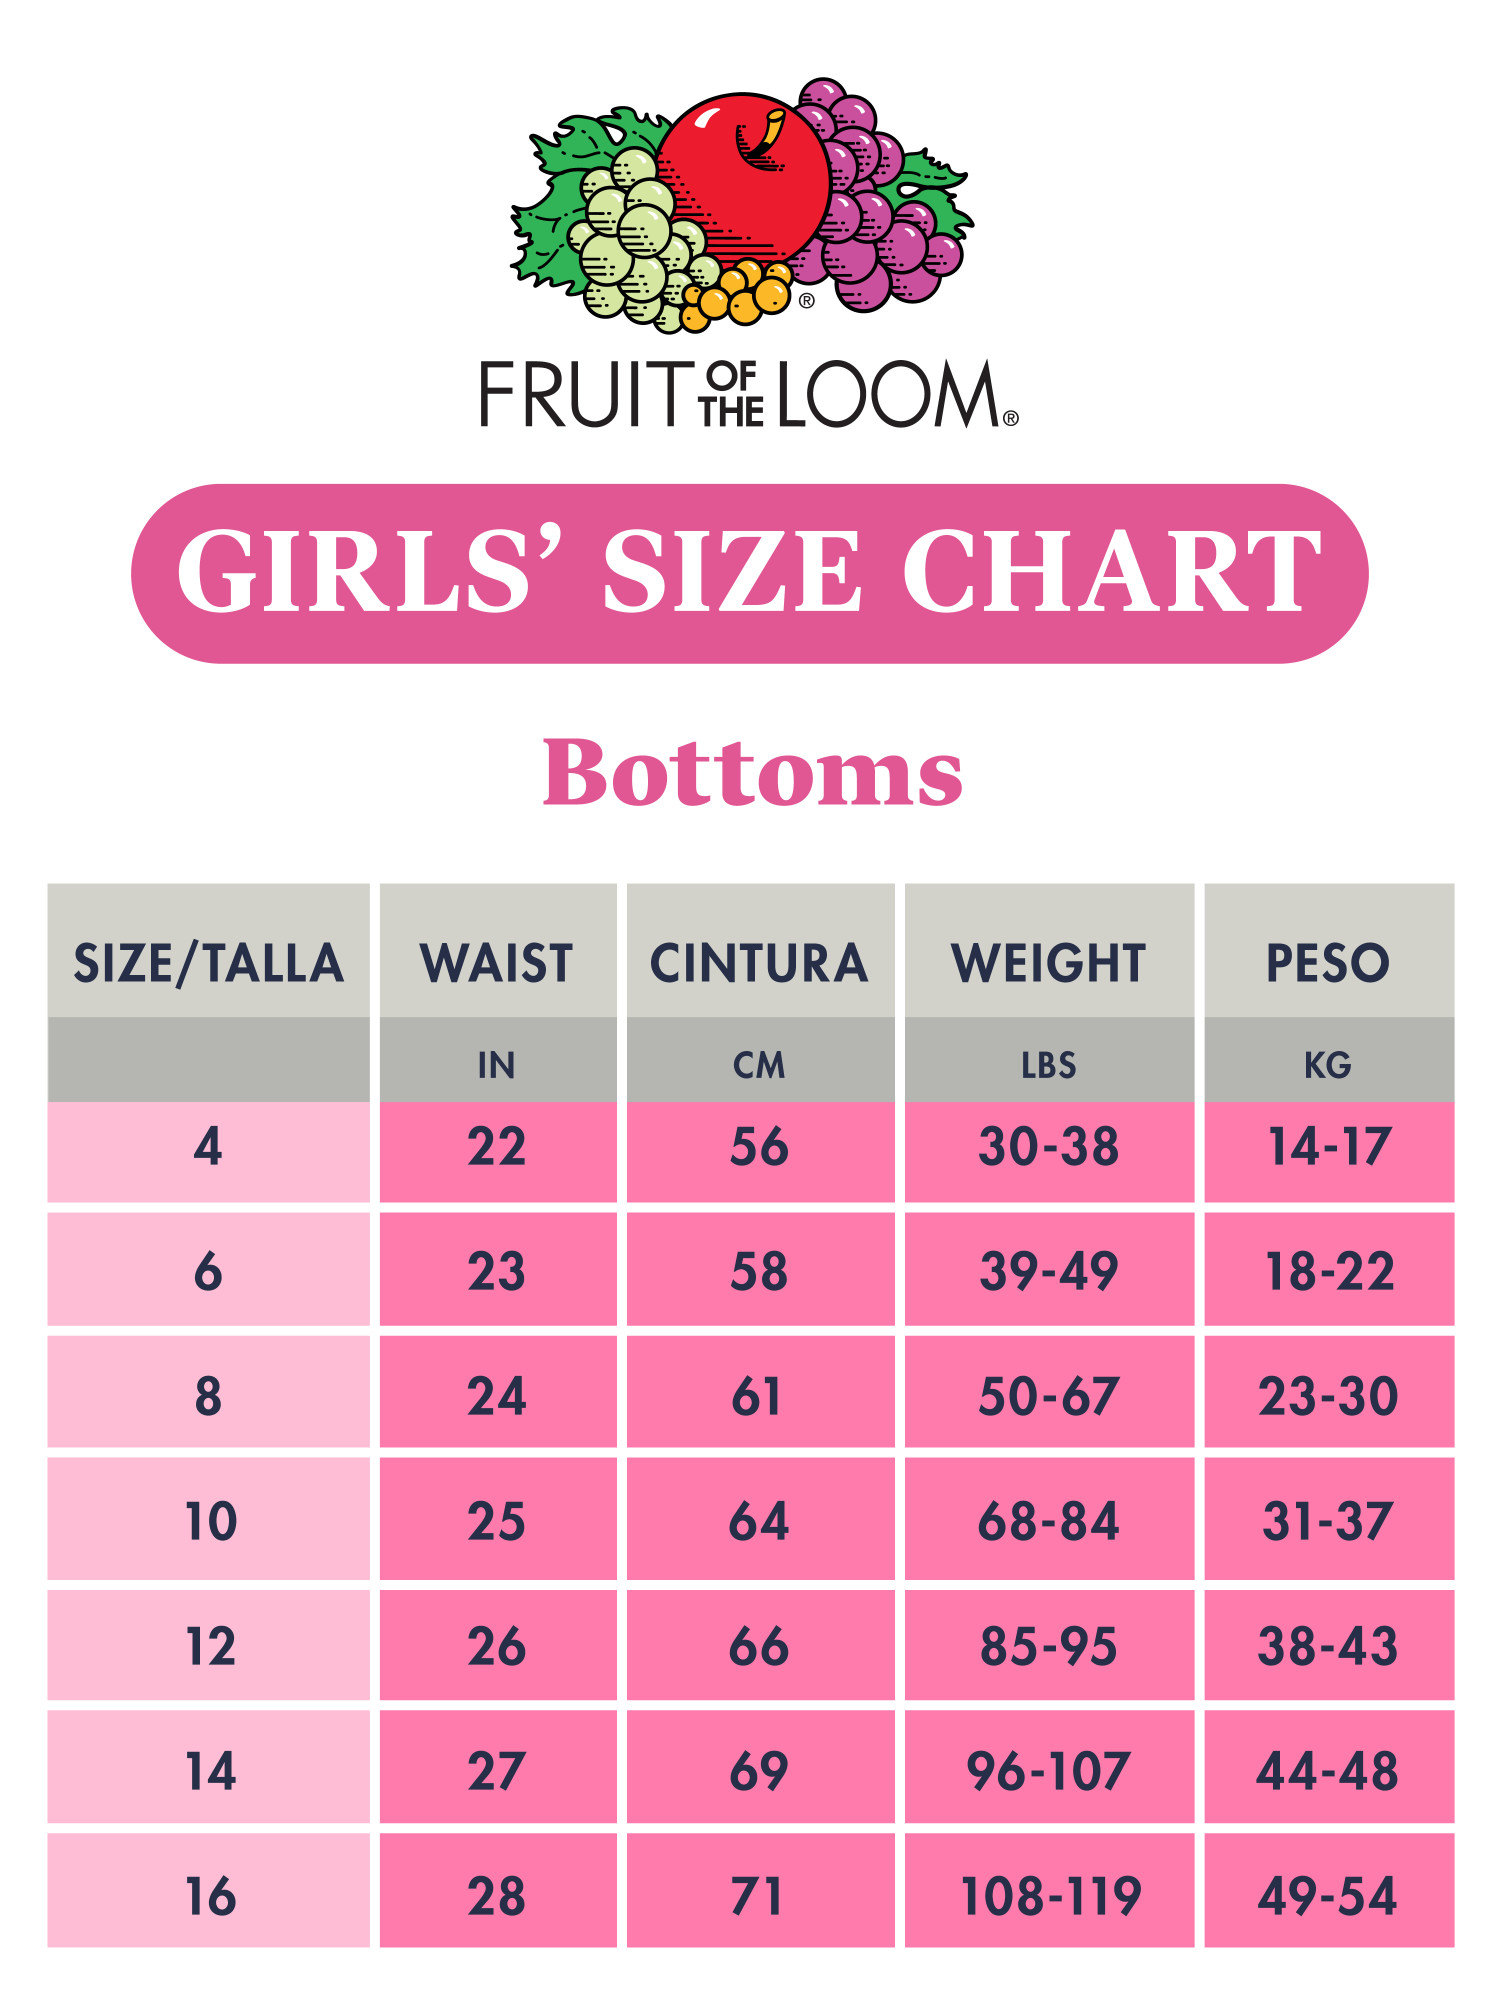 Fruit of the Loom Girls' Boy Short Underwear, 14 Pack - image 6 of 12